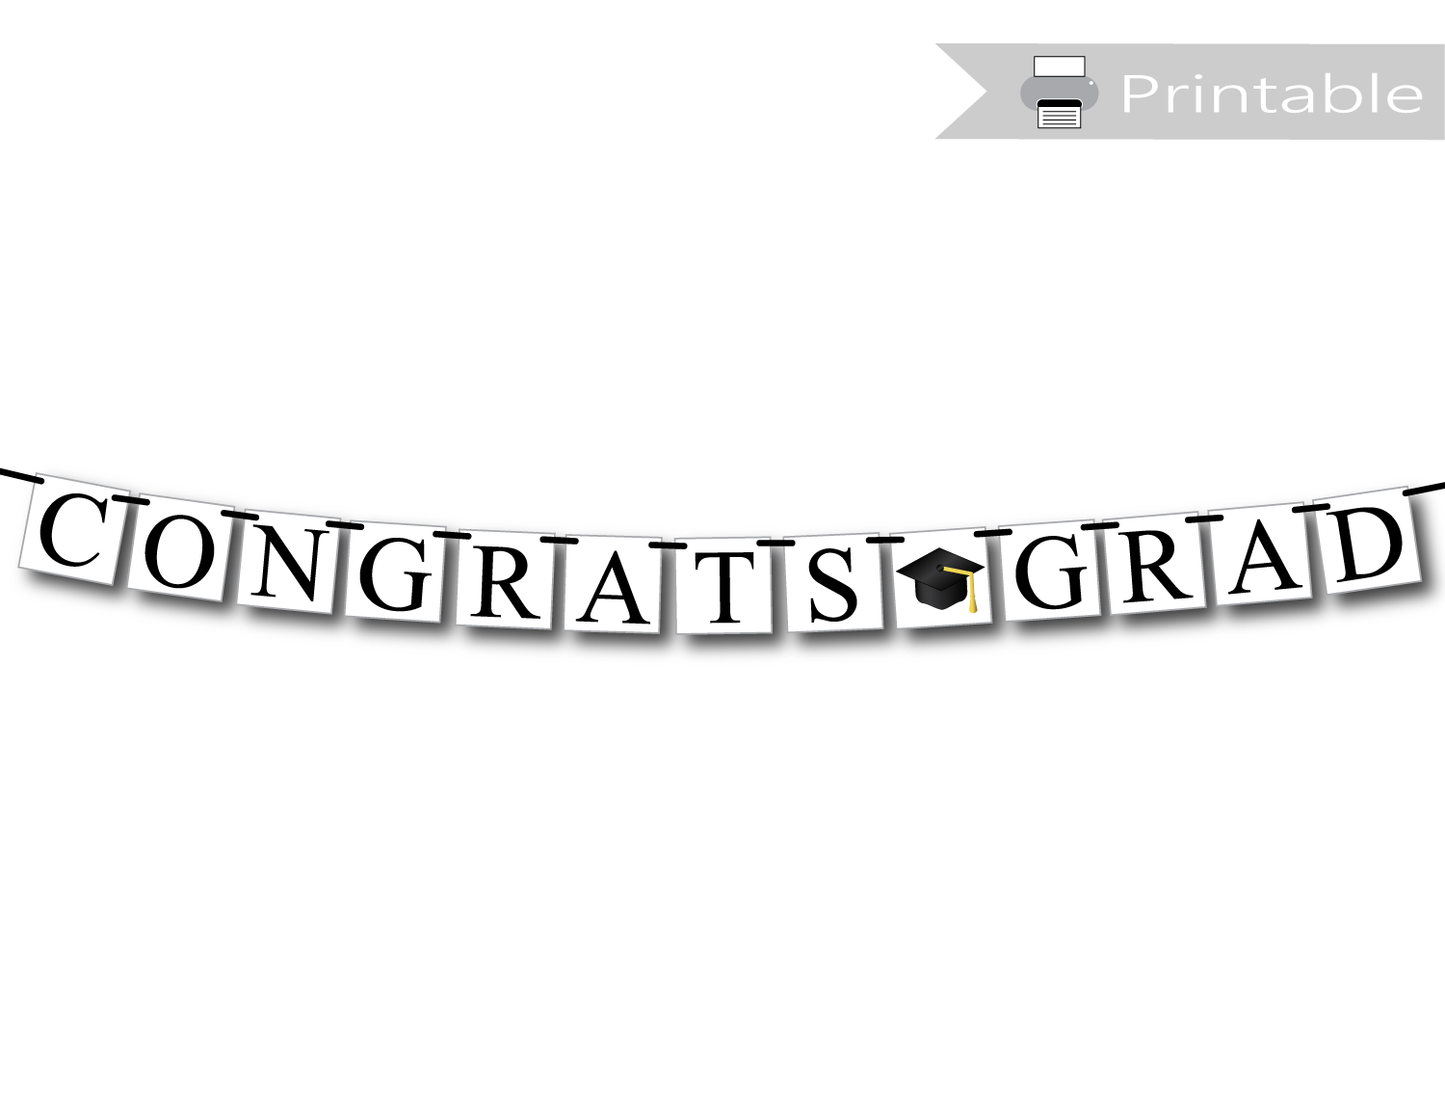 congrats grad banner printable with graduation cap accent - Celebrating Together